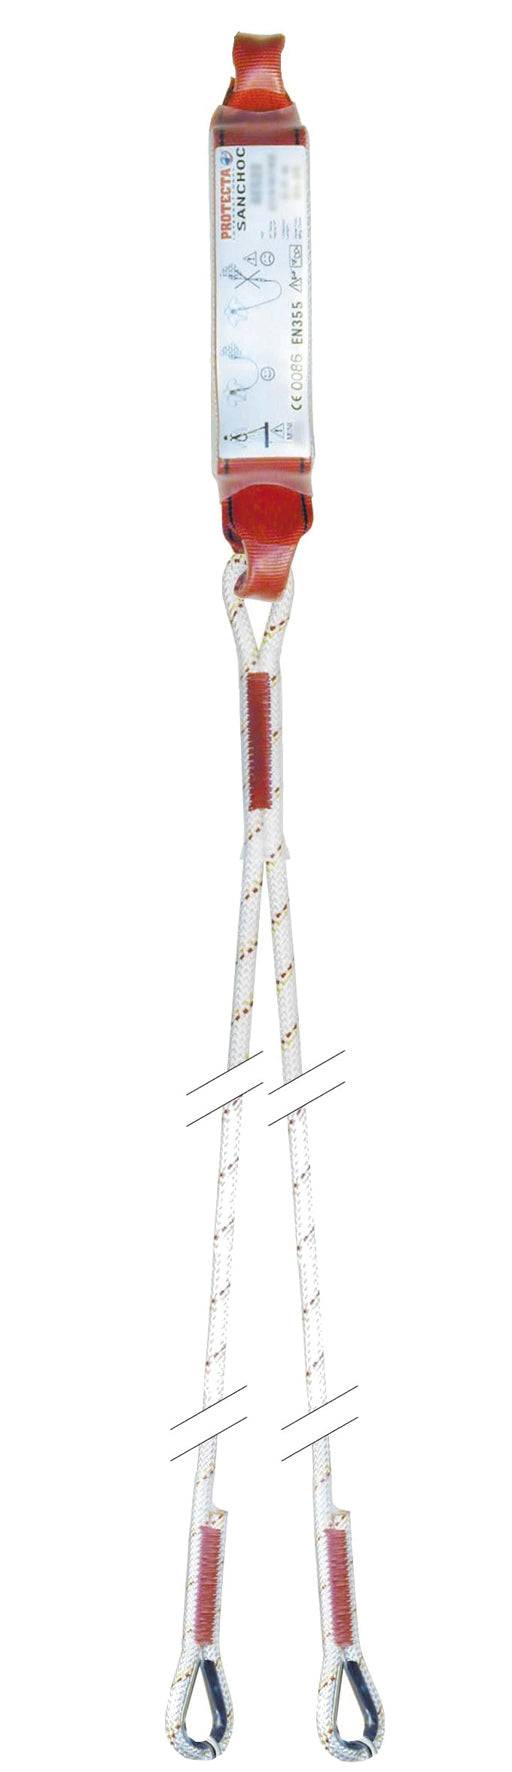 3M Protecta 1.5m Twin Leg Rope Shock Absorbing Lanyard AE532/2 - SecureHeights